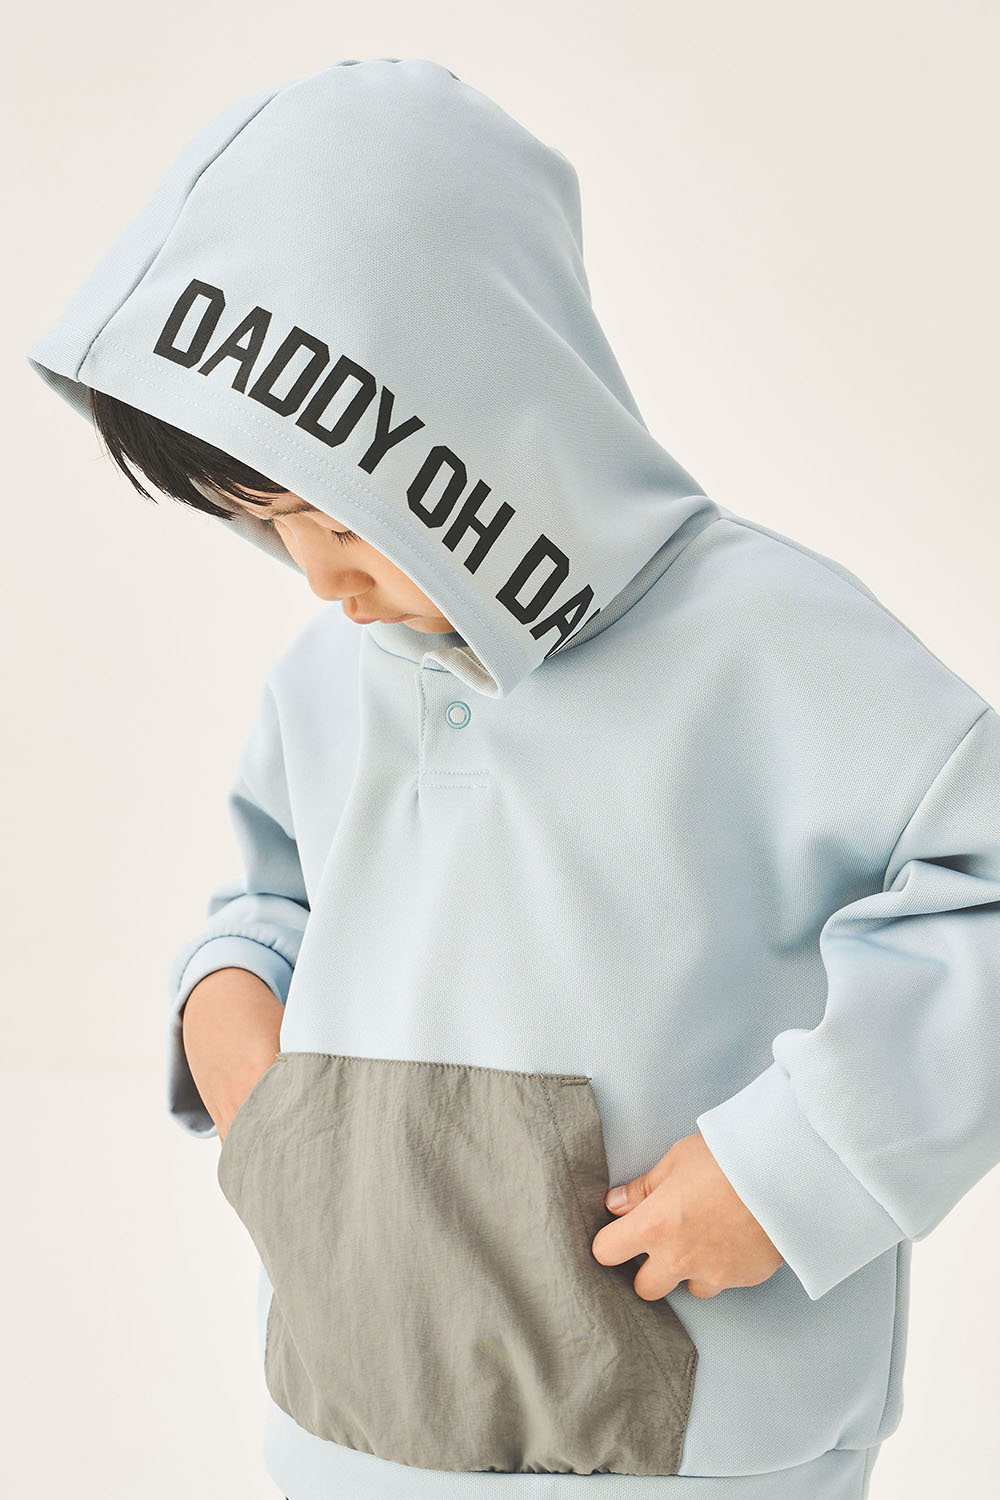 2022 AUTUMNWINTER Daddy Oh Daddy STYLE10 | 子供服 通販こどもの森 - メーカー直営公式